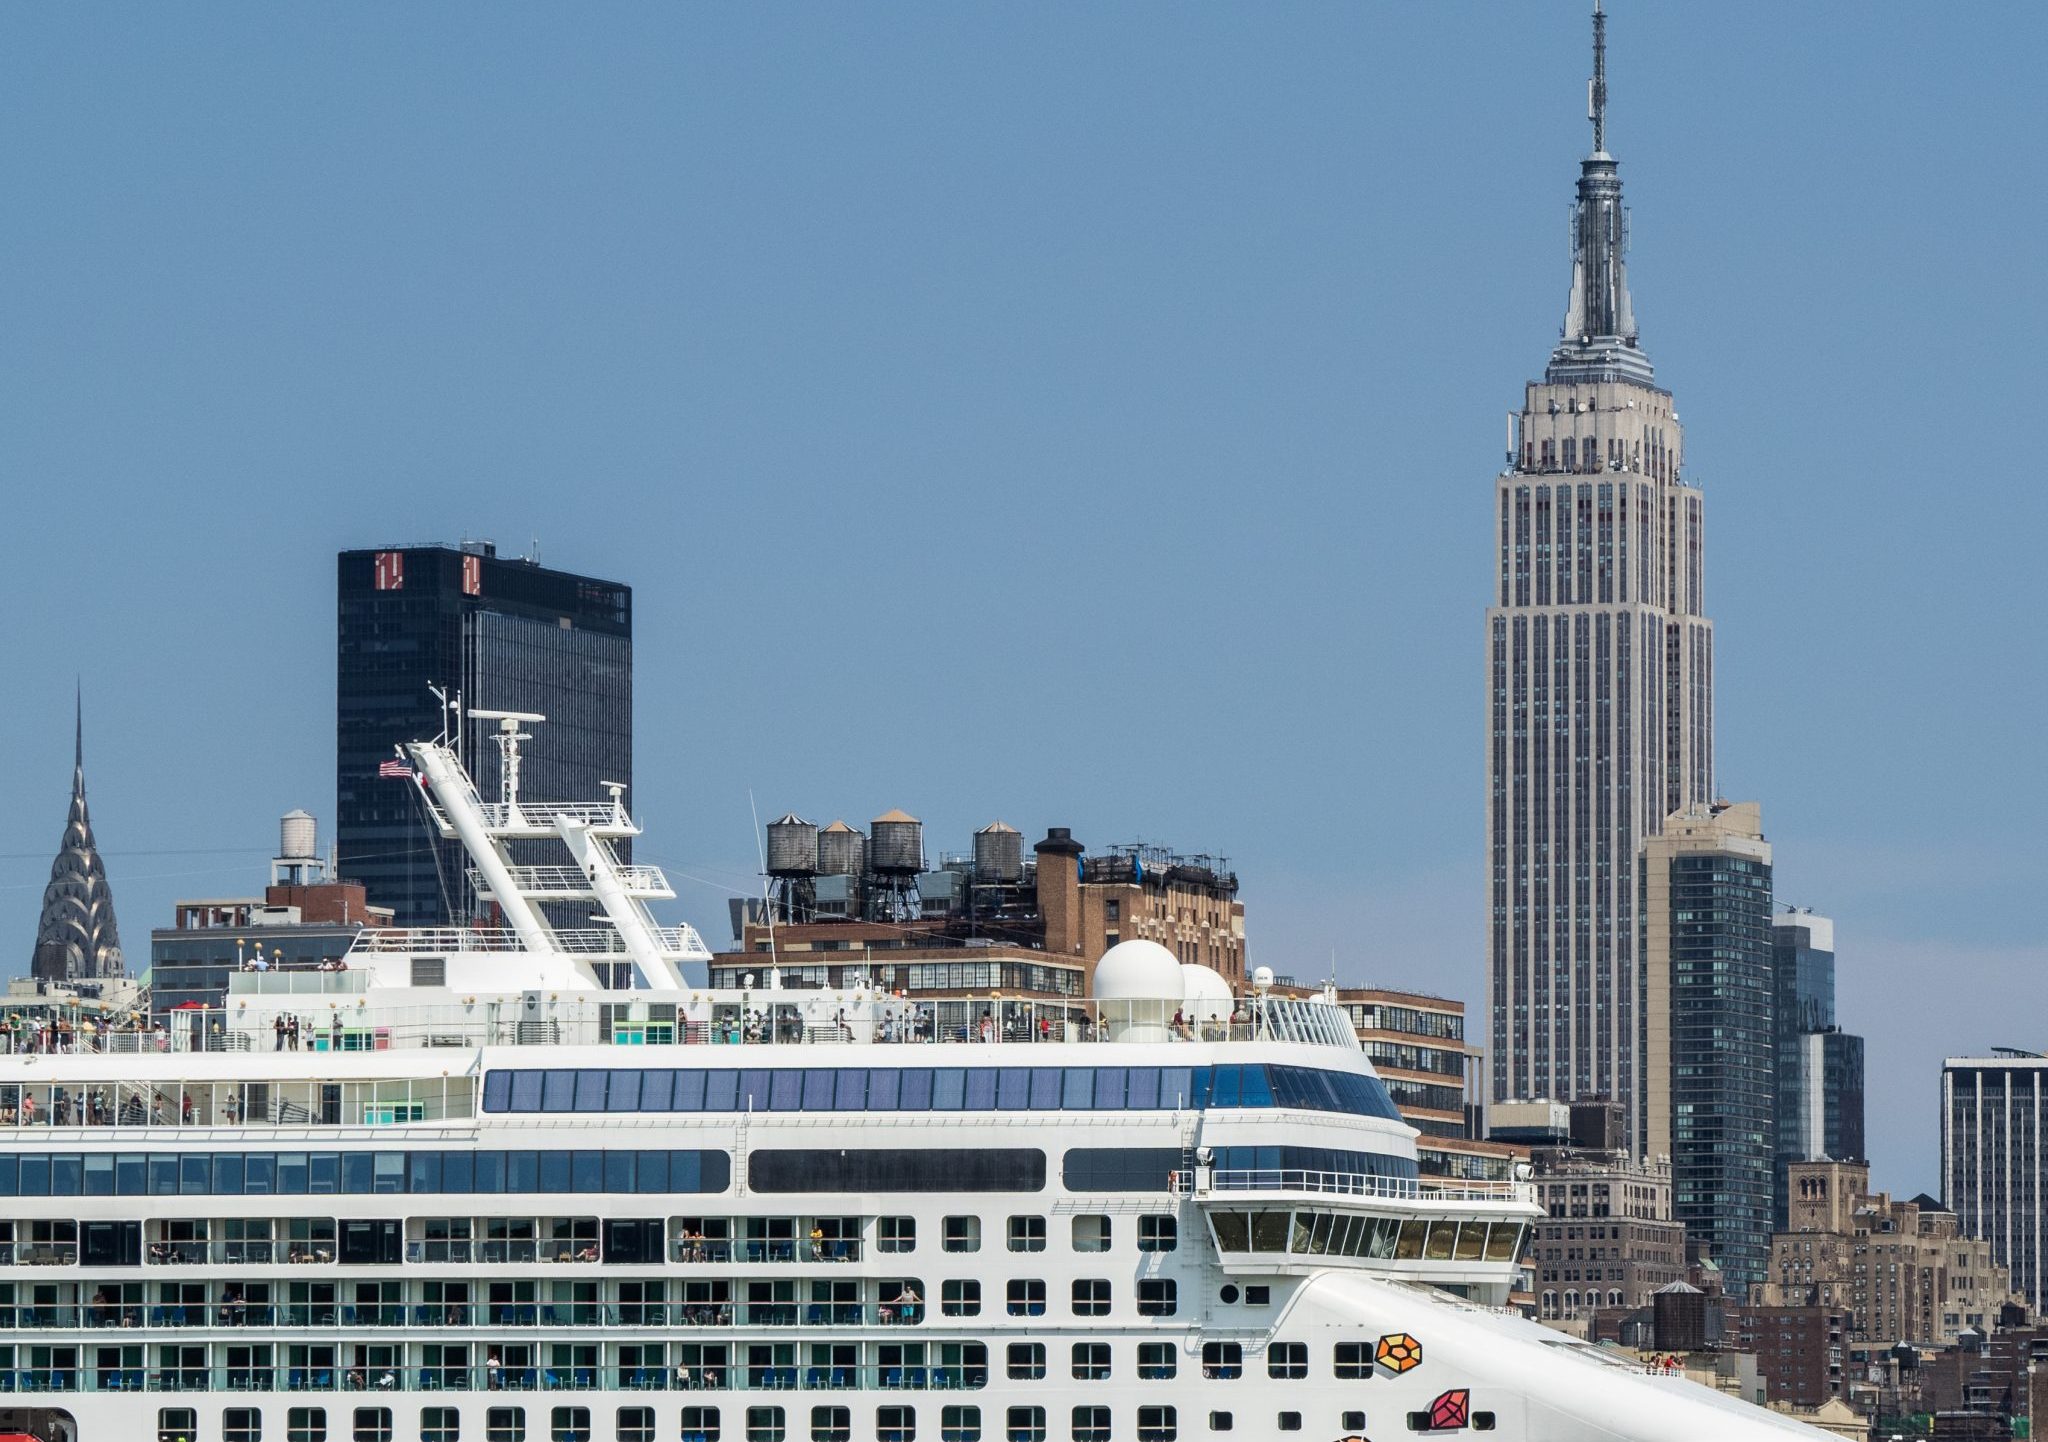 NORWEGIAN GEM Cruise Ship on the Hudson River, Manhattan, New York City